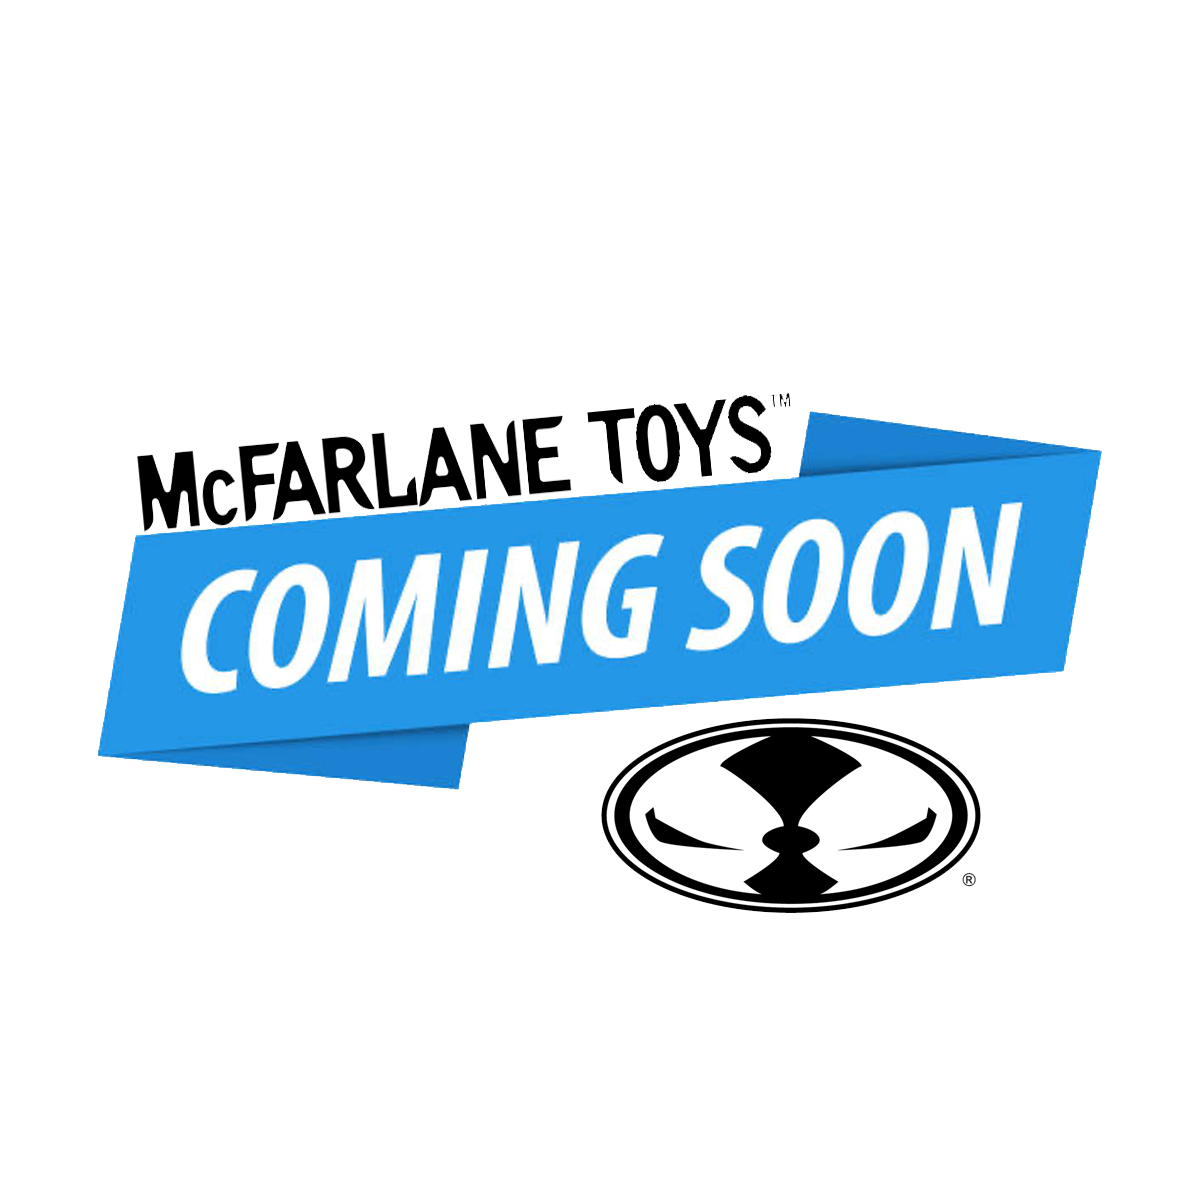 McFarlane Toys DC Heroes Multiverse Build-a-Wave Justice League Task Force - Batman 6-inch Action Figure (Darkseid Build-a-Wave)